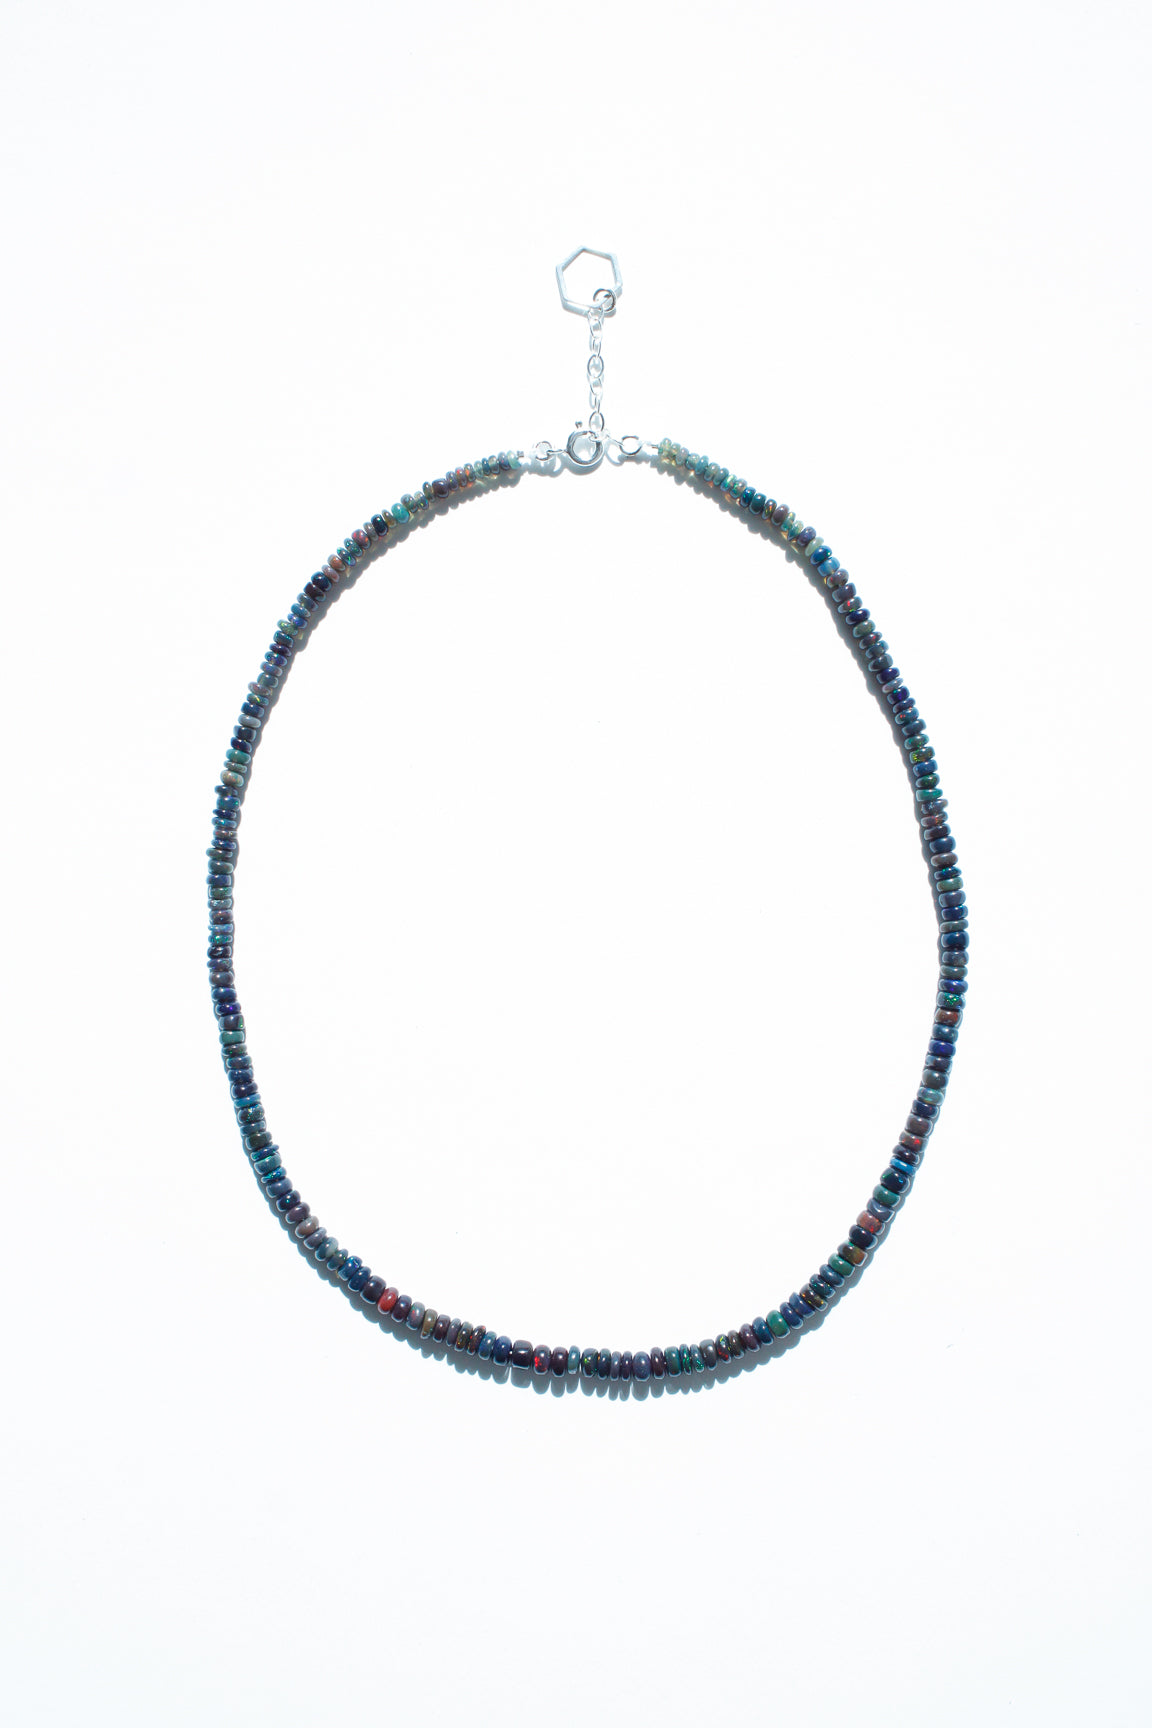 Stone Necklace - Black Opal